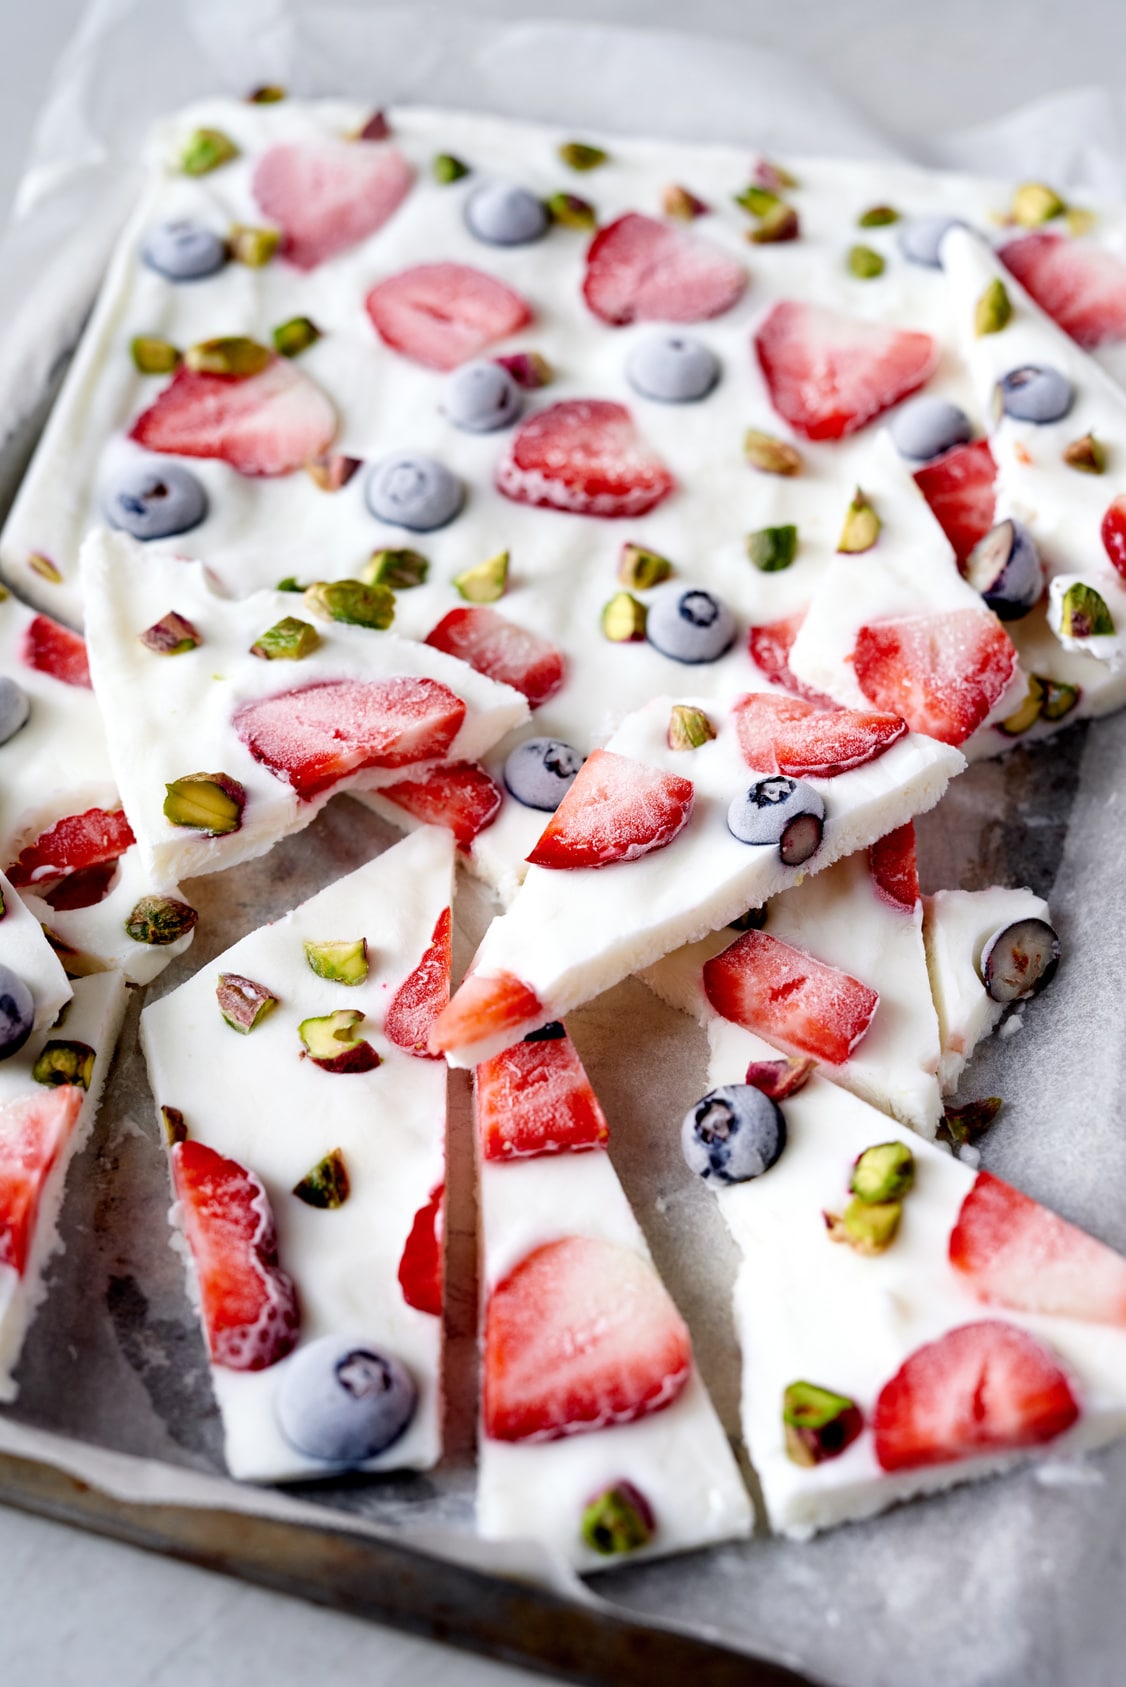 Frozen yogurt bark with strawberries, blueberries and pistachios